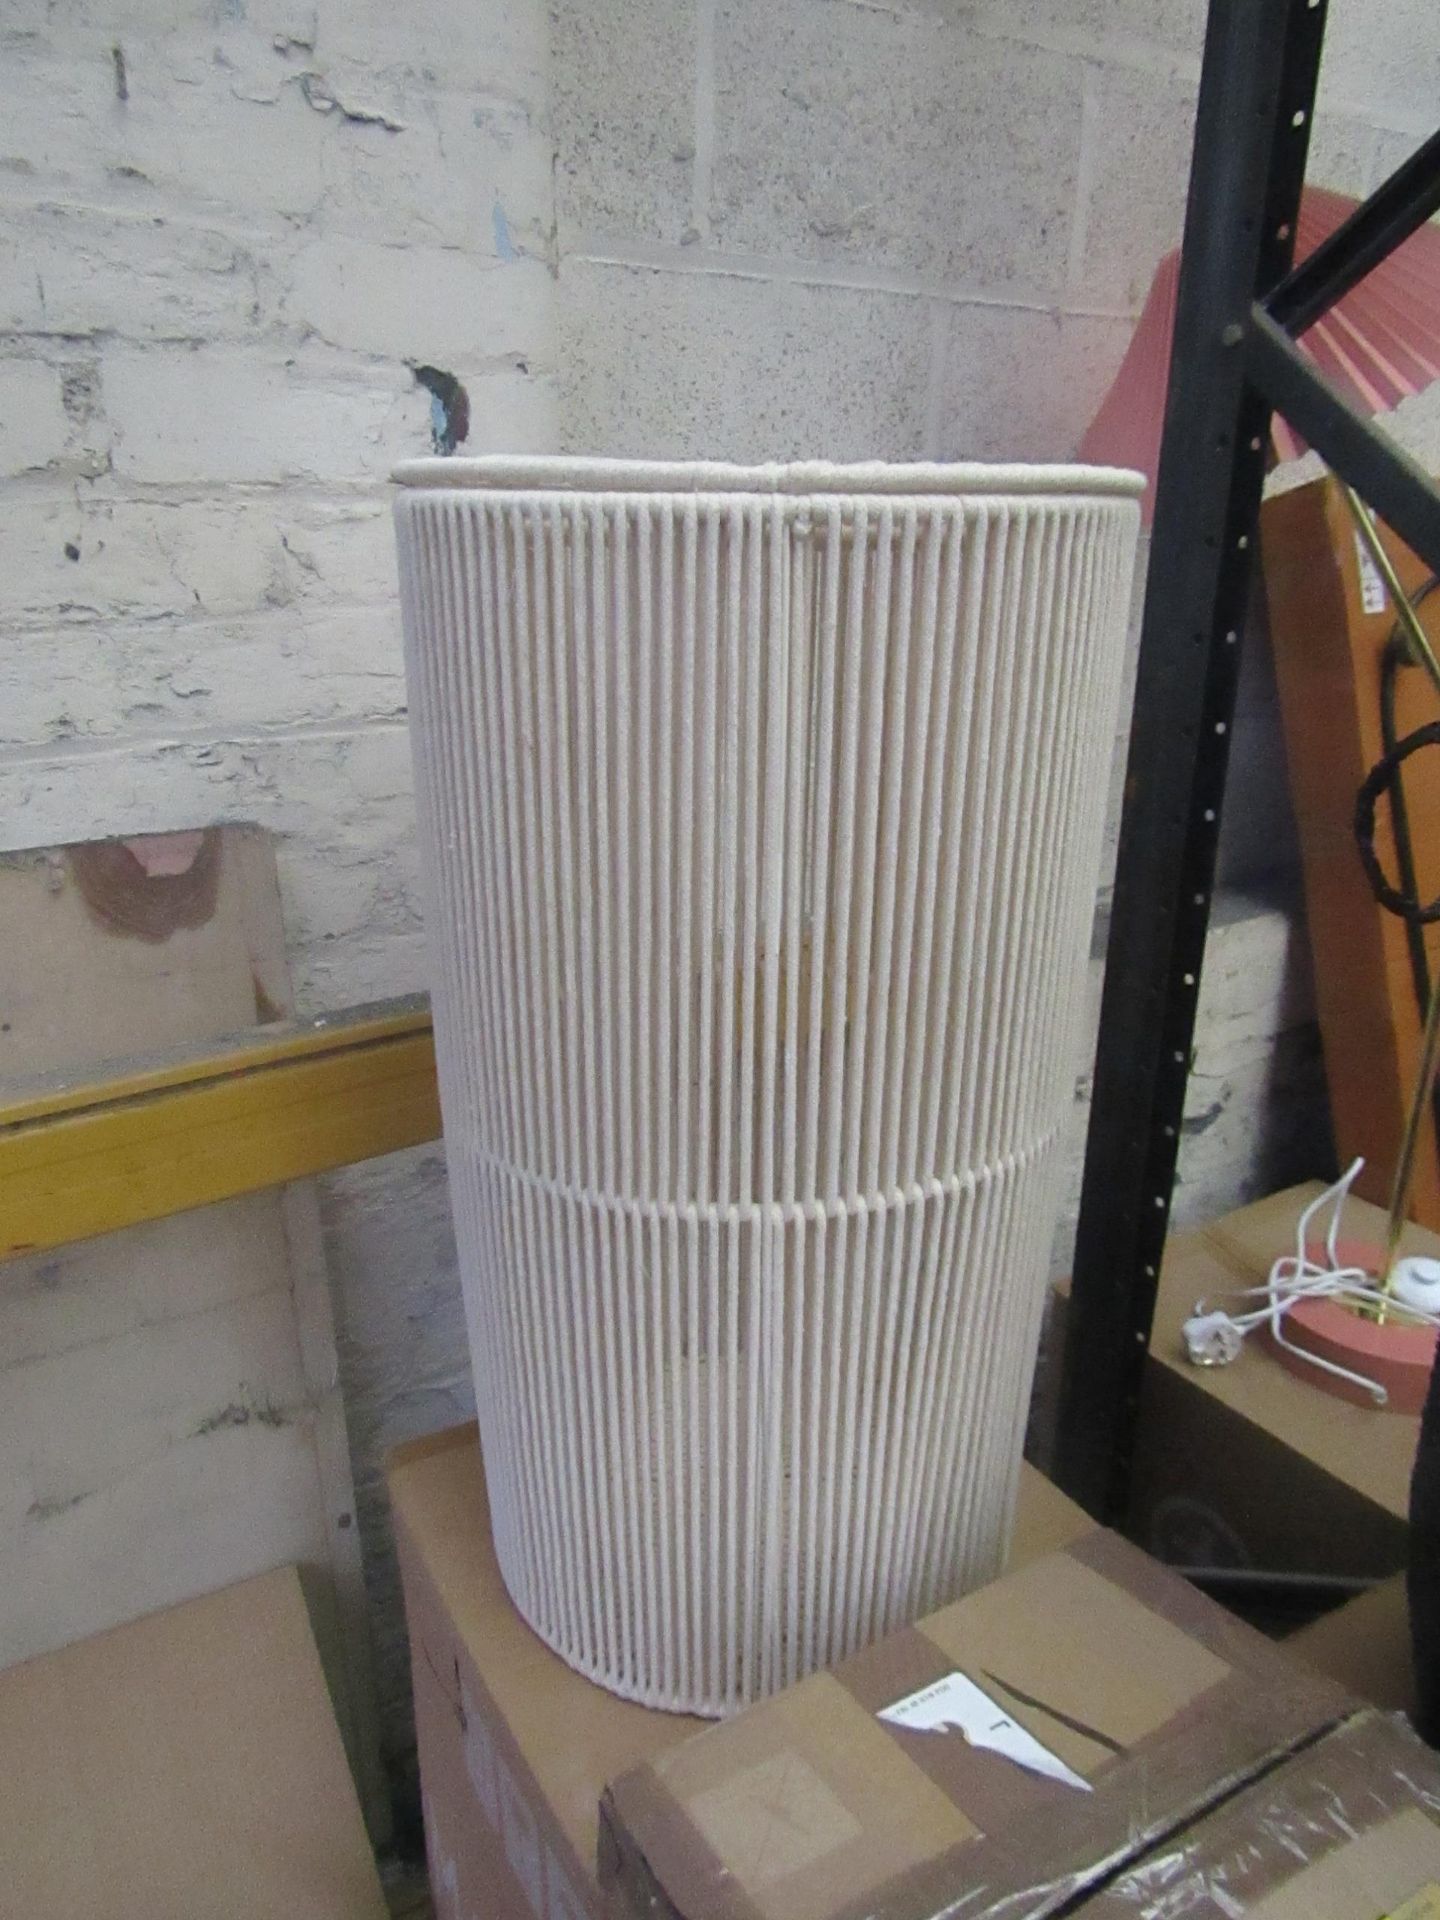 1 x Made.com Holgate Rope Laundry Basket Off White RRP £49 SKU MAD-STOHOL001WHI-UK TOTAL RRP £49